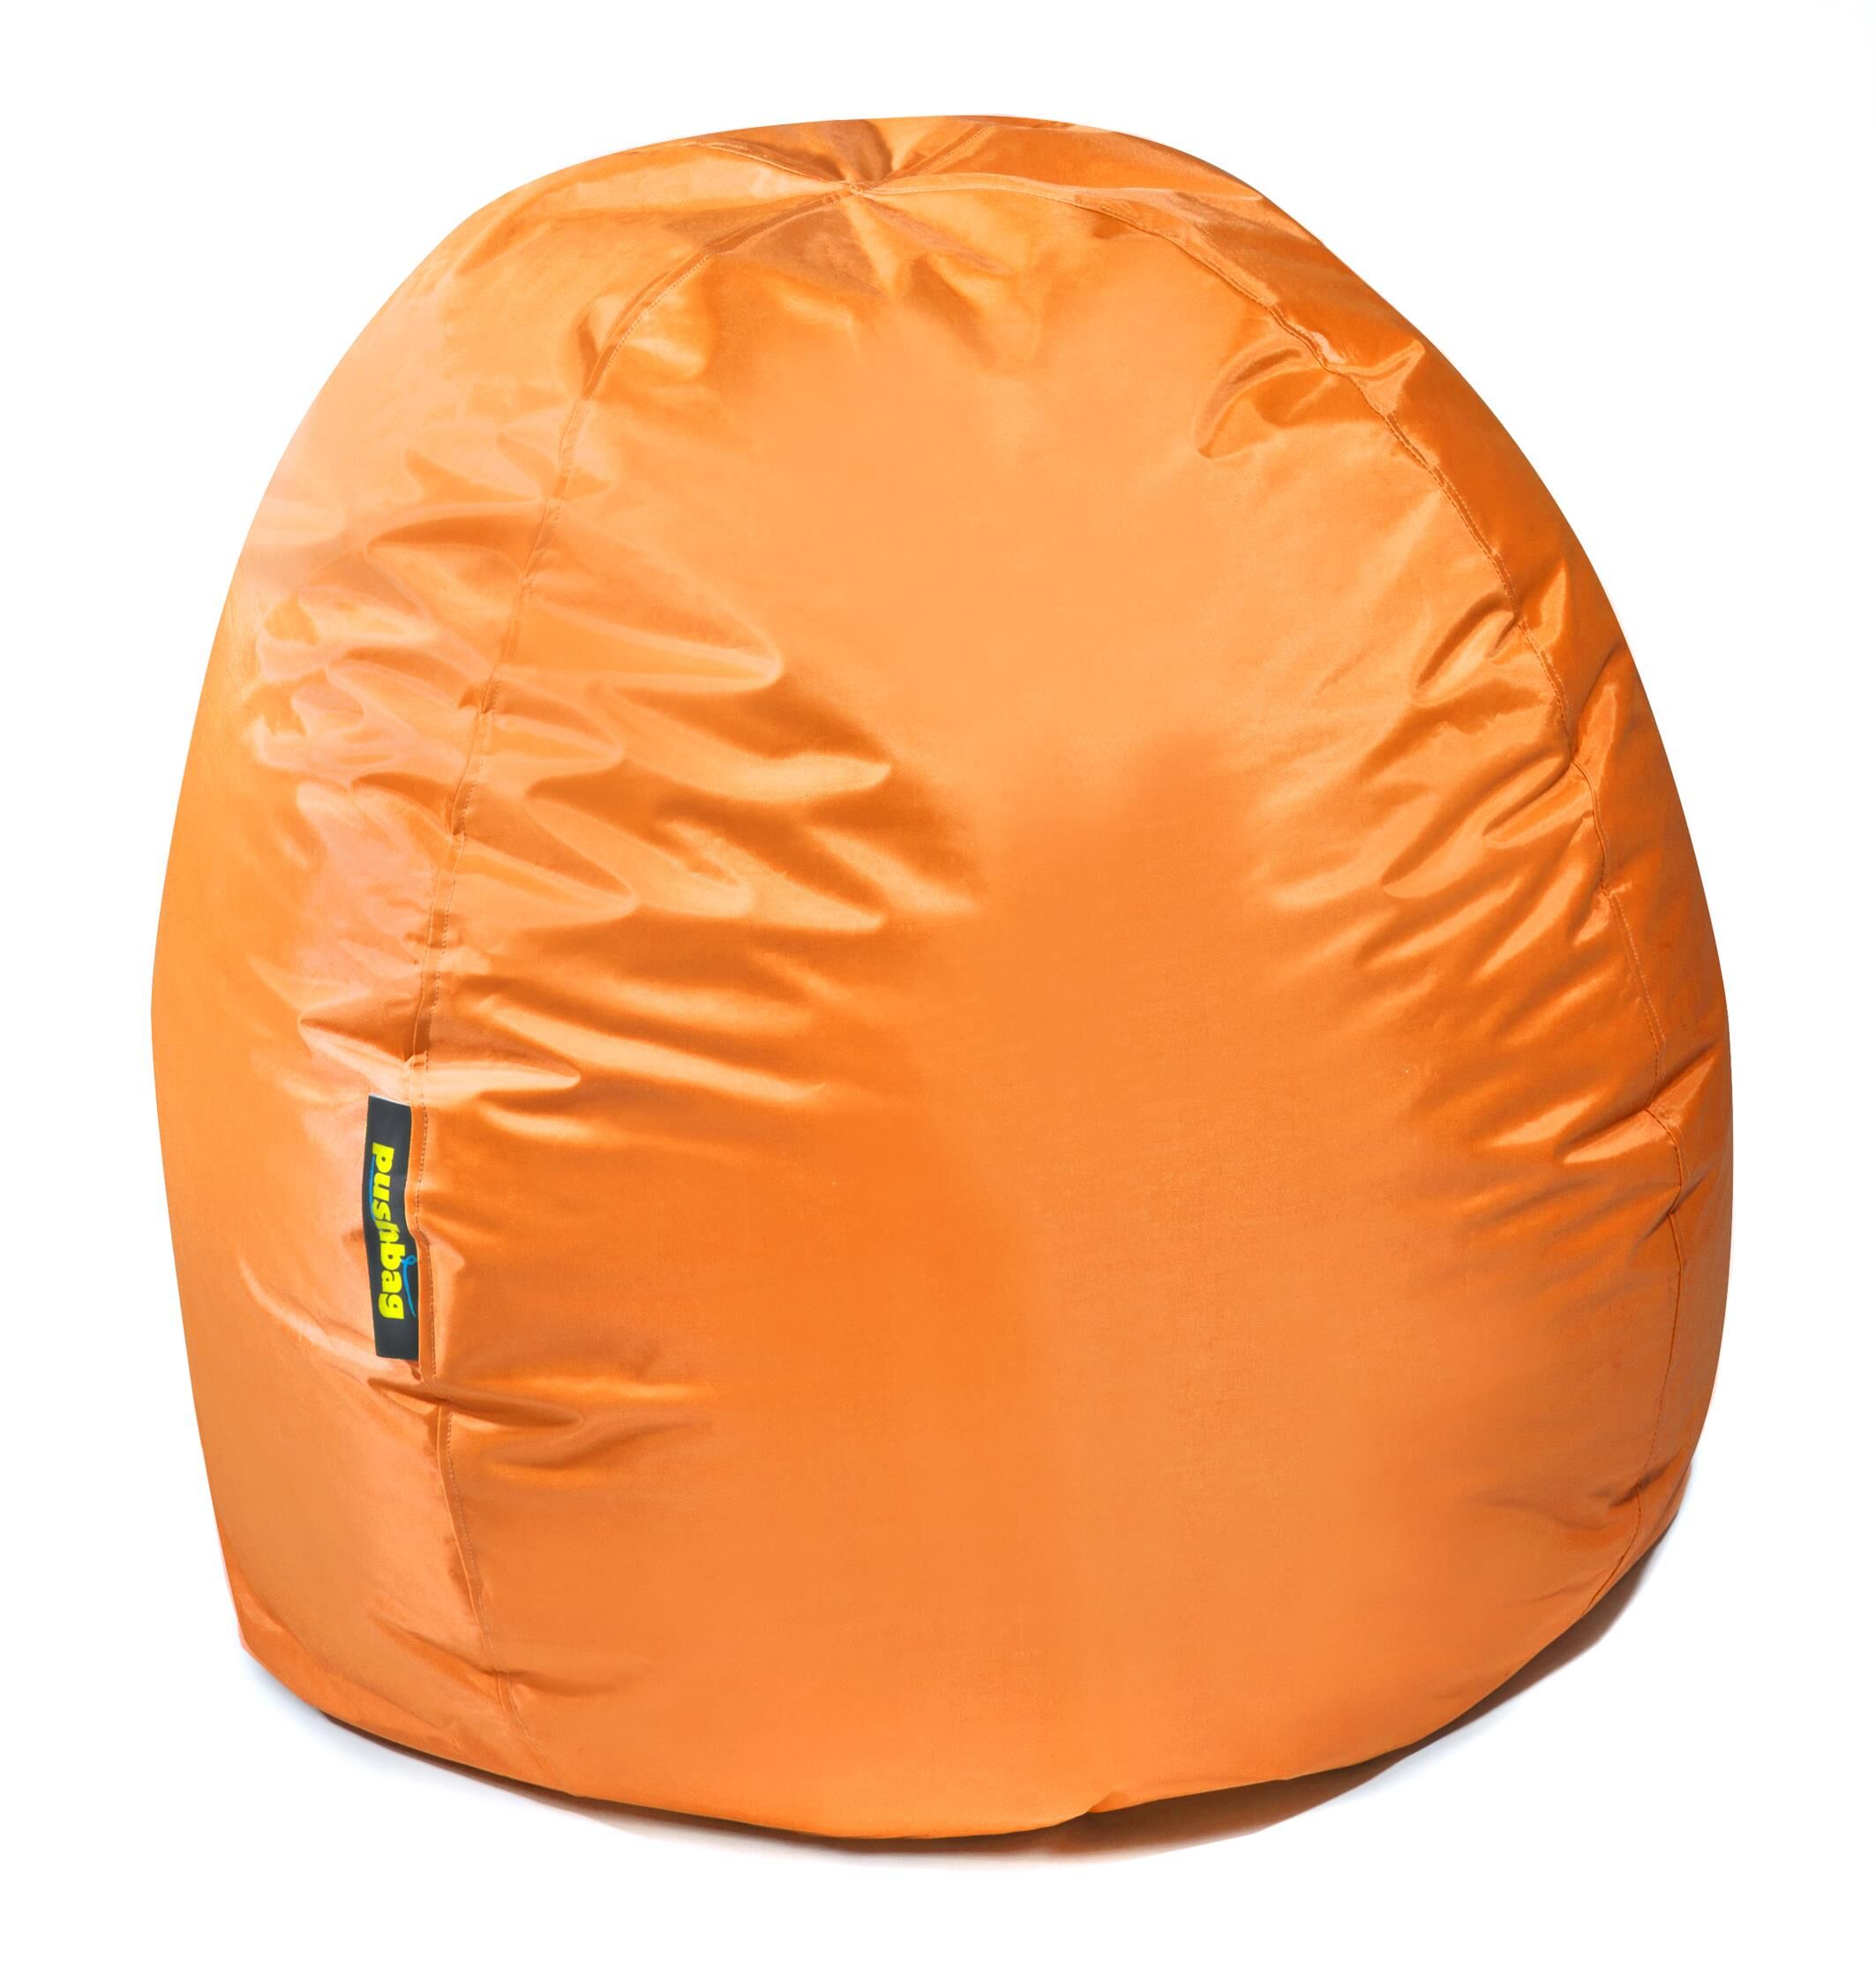 BAG300 Oxford orange (05)